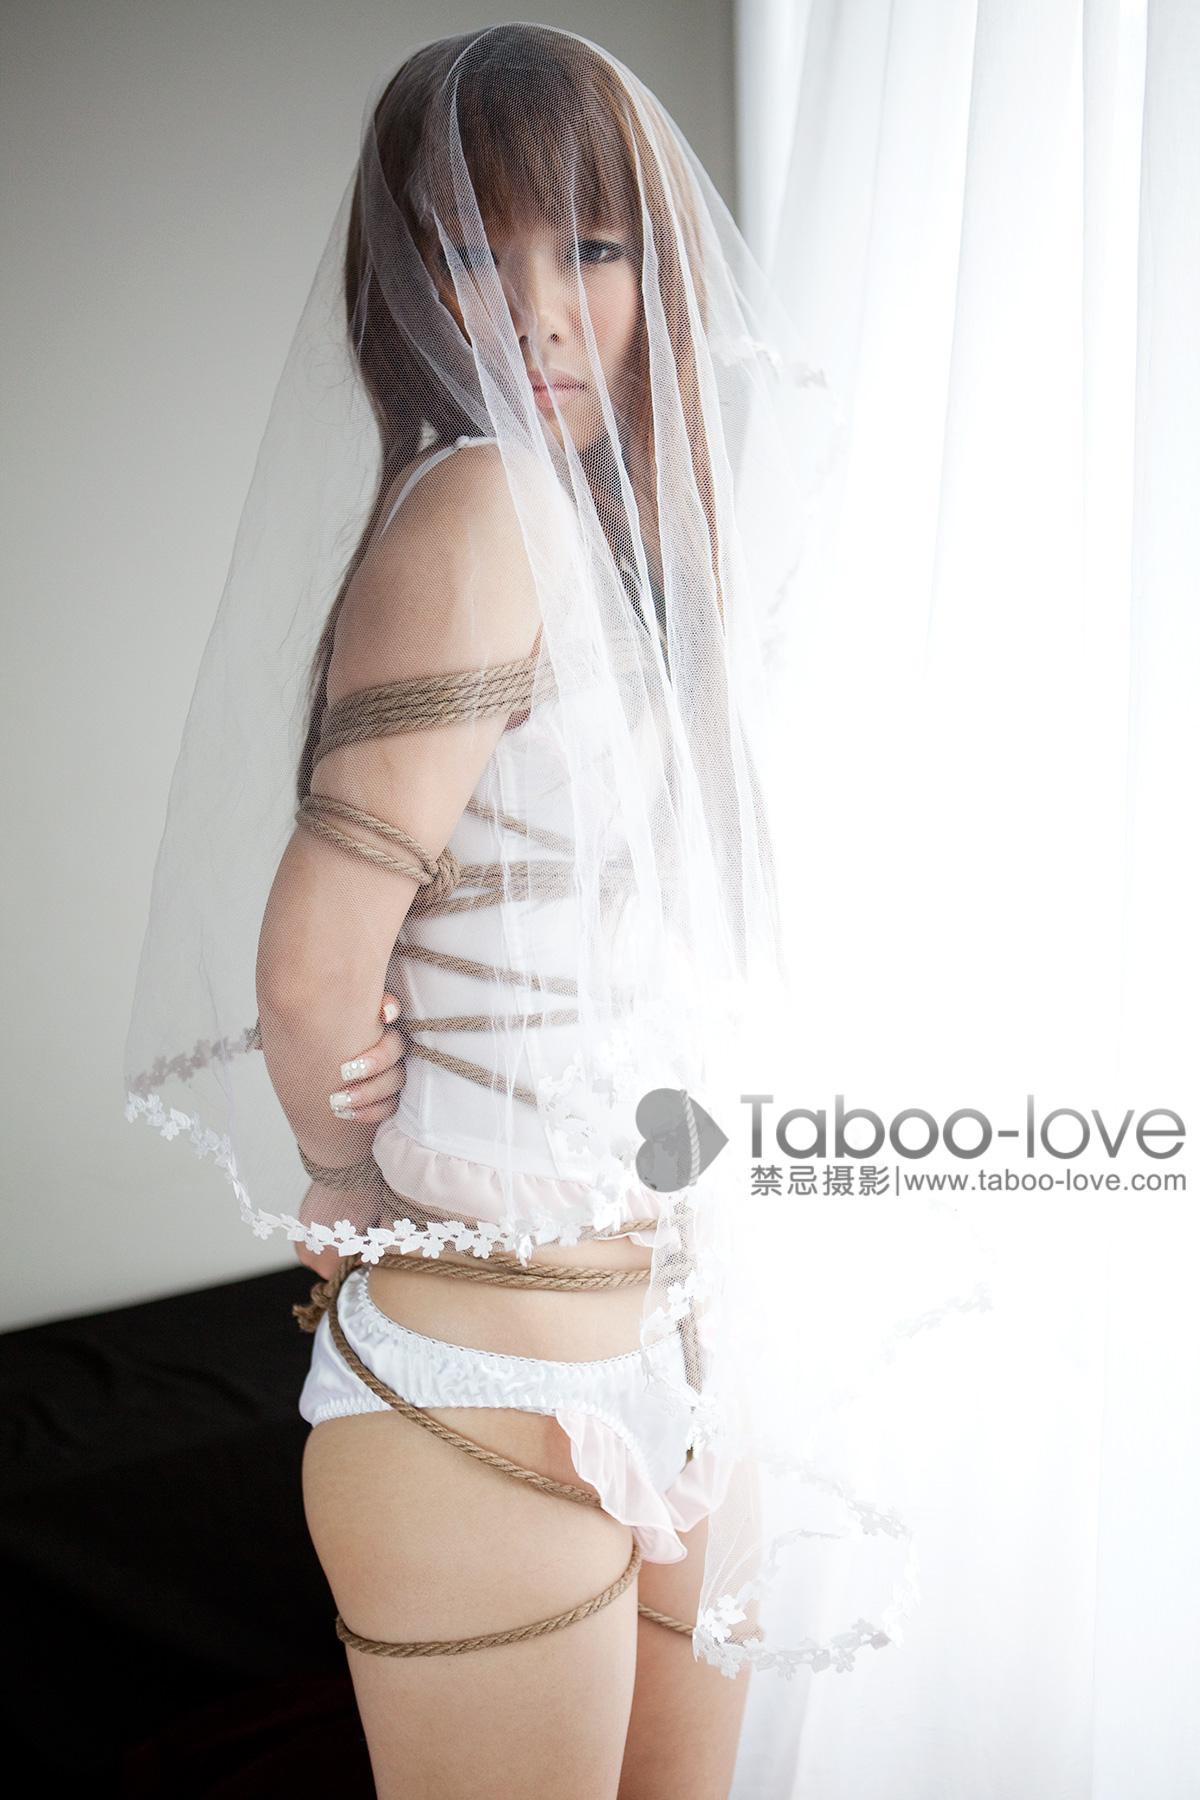 Taboo-love NO.053 點點 可愛動人的點點拍攝活動花絮  禁忌攝影繩藝 - 11.jpg